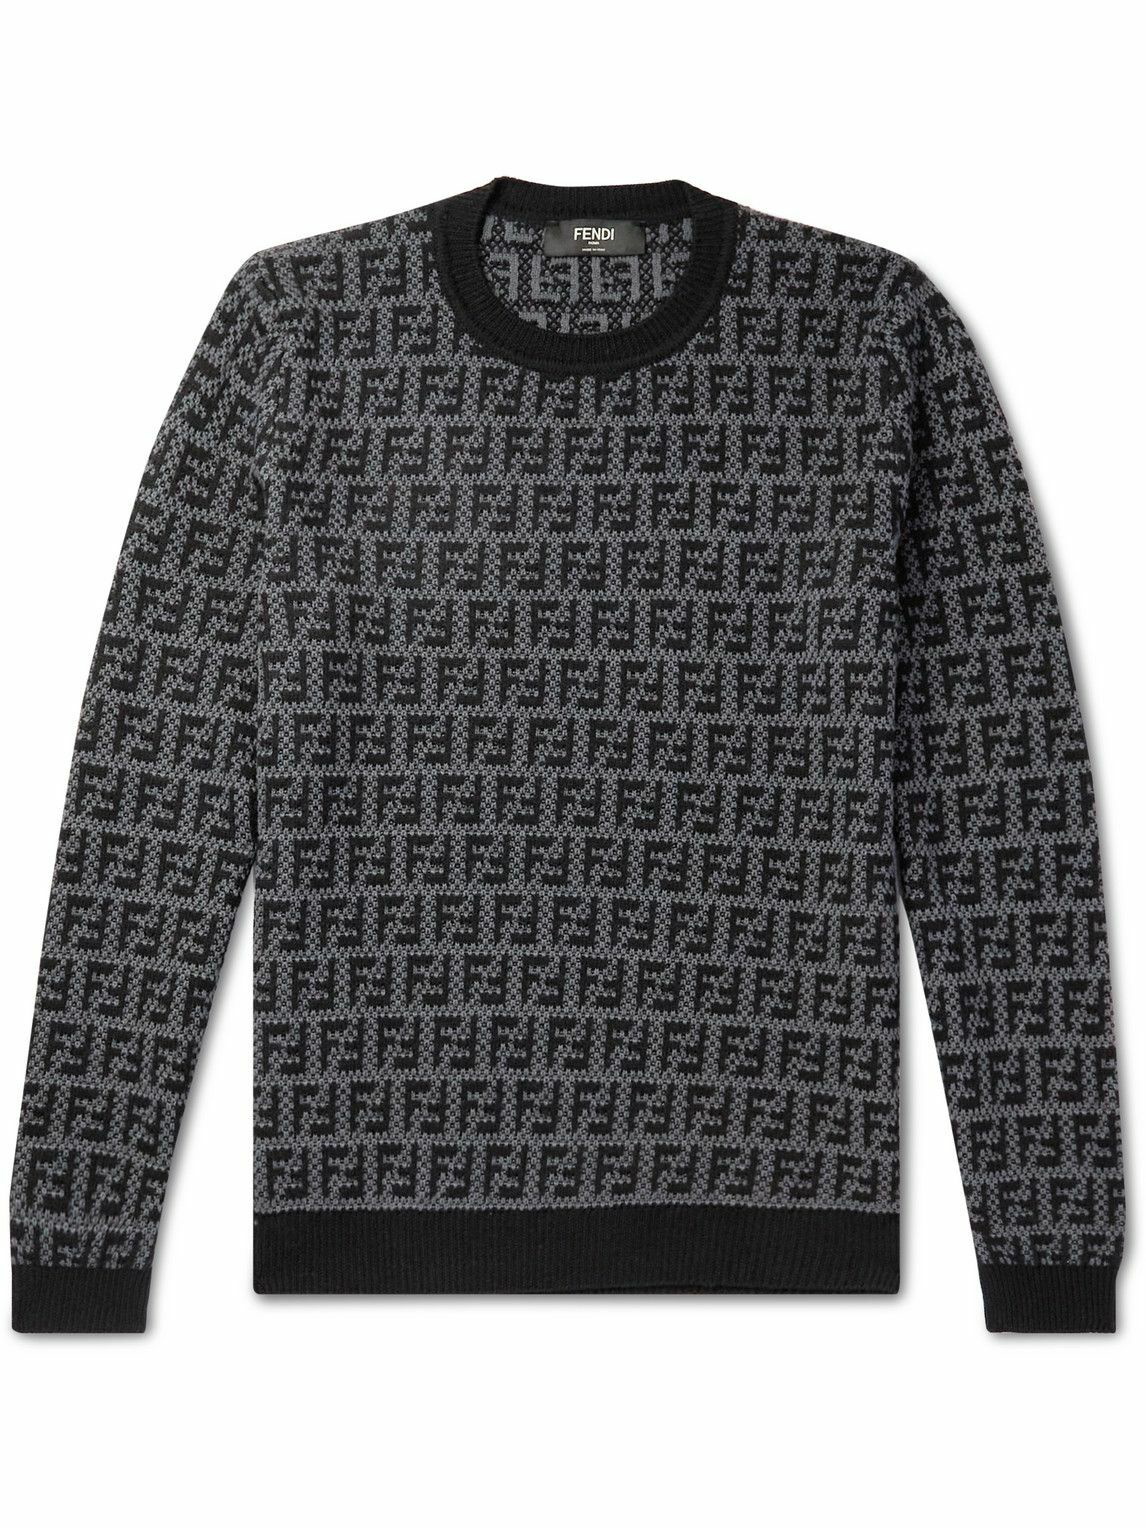 Fendi - Logo-Intarsia Wool, Cotton and Cashmere-Blend Sweater - Black Fendi